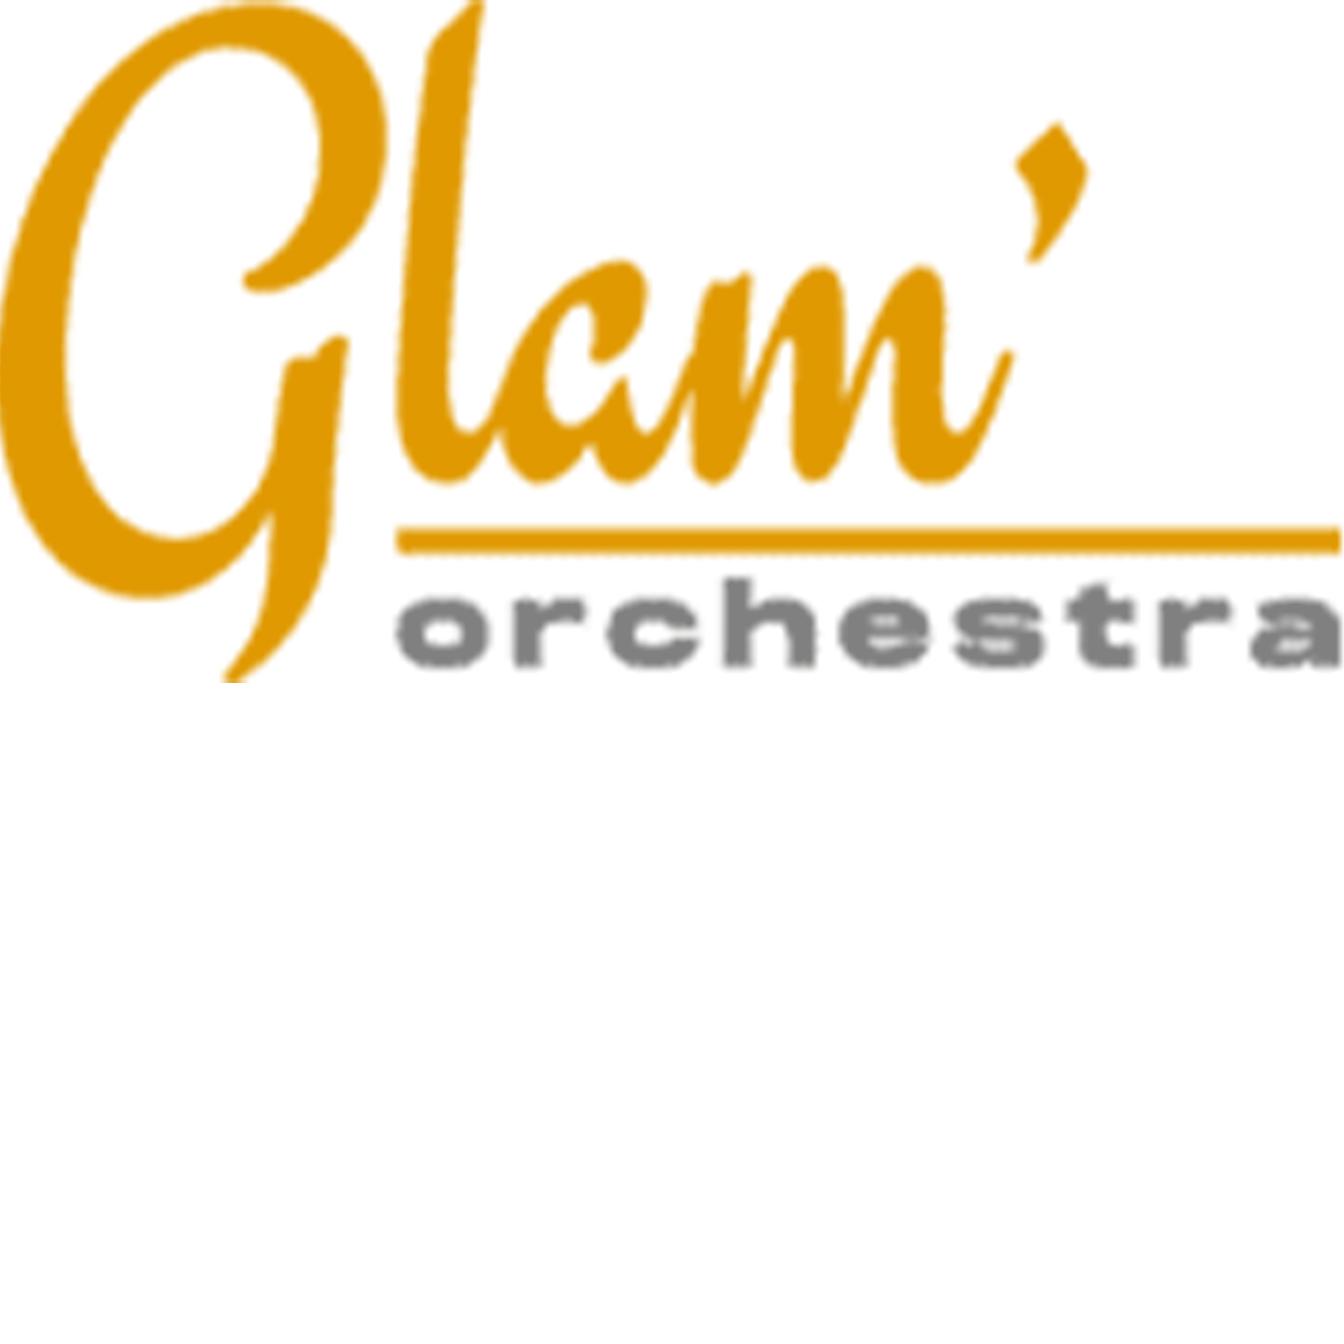 Glam' orchestra